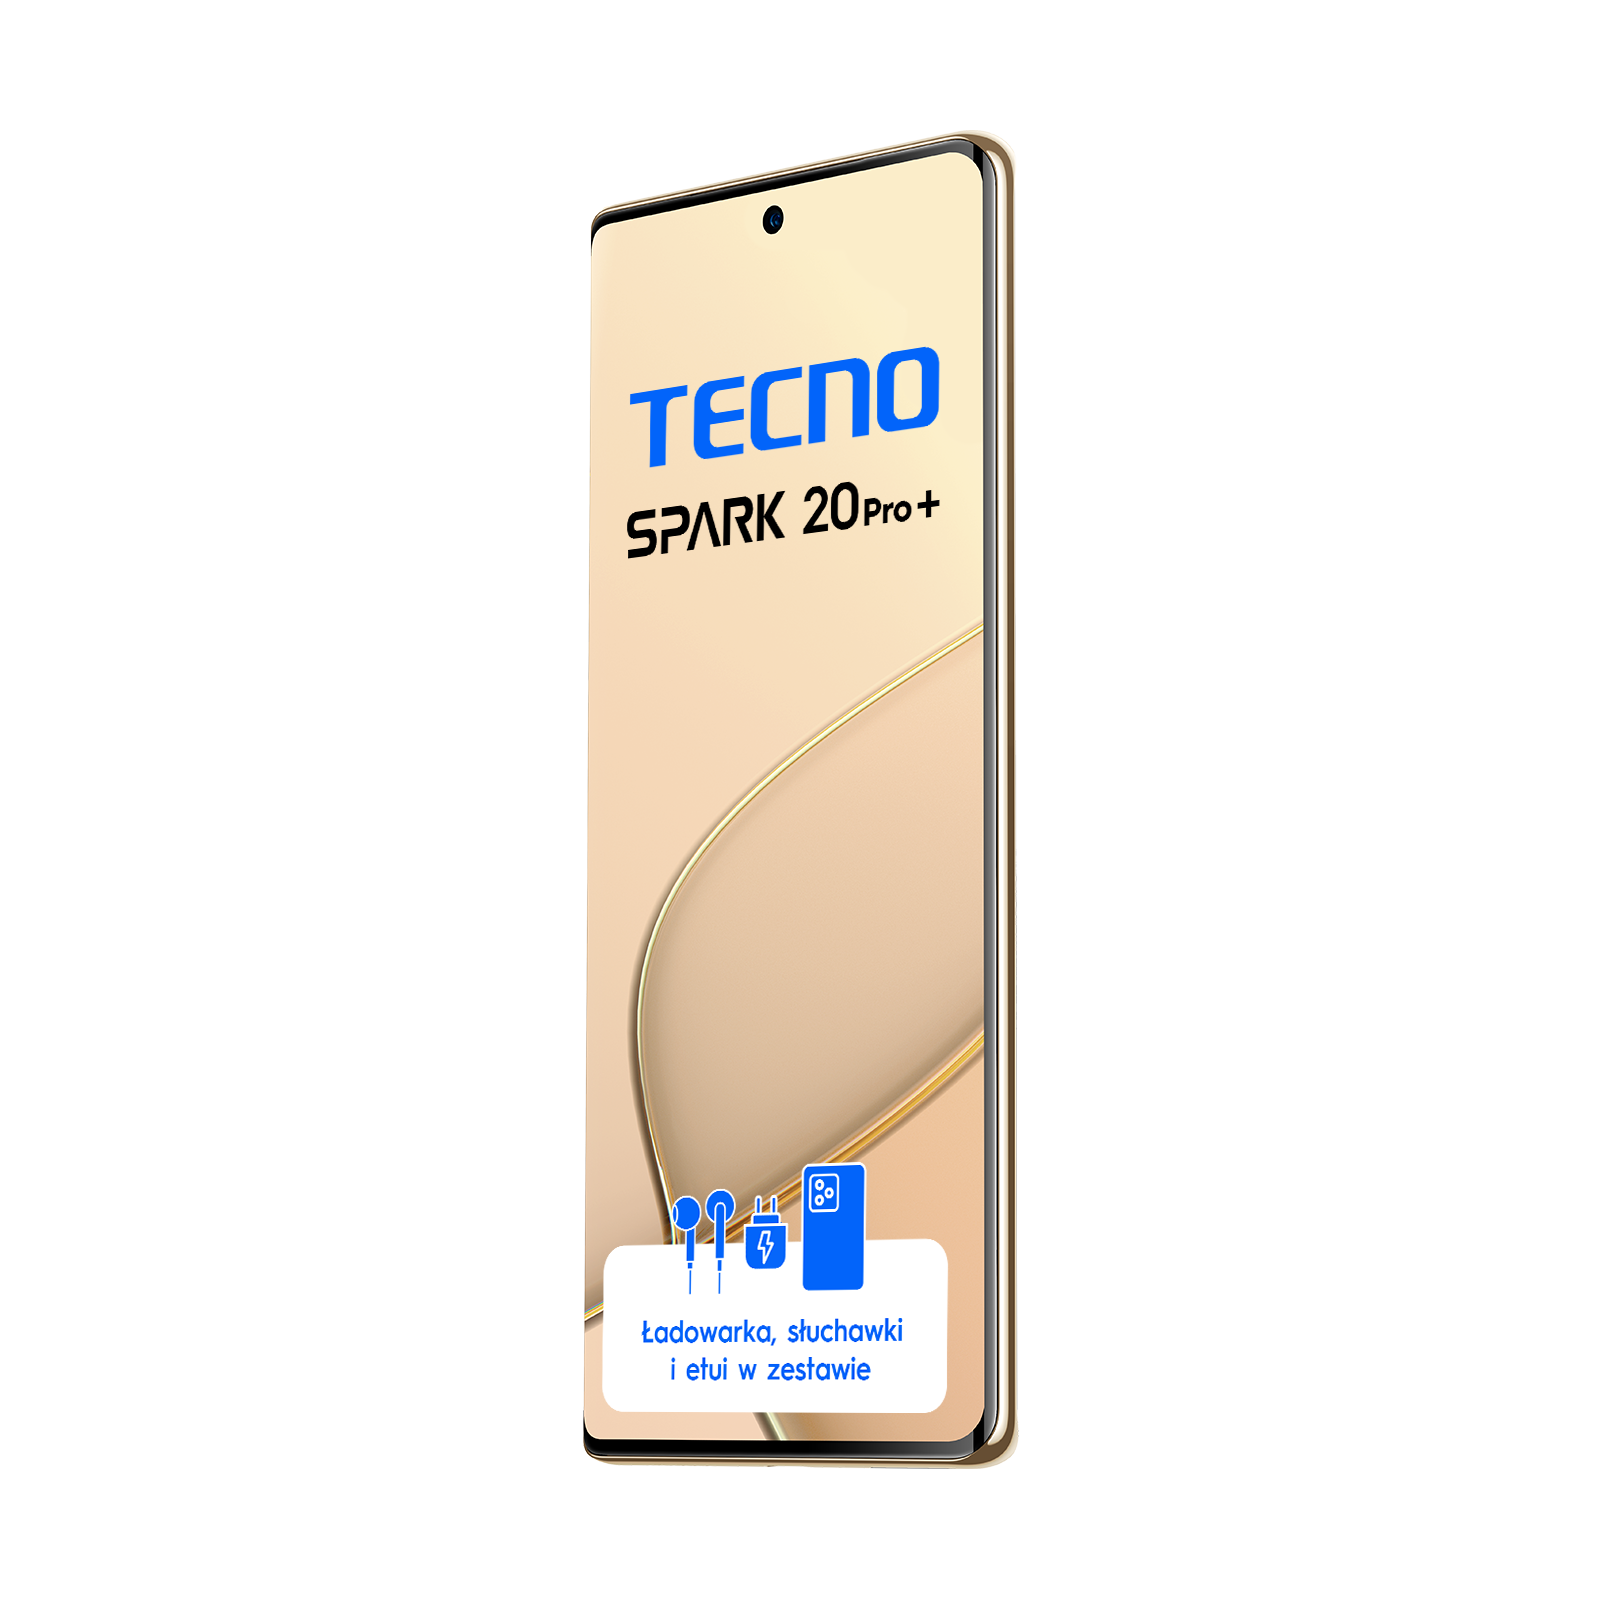 TECNO SPARK 20 Pro+